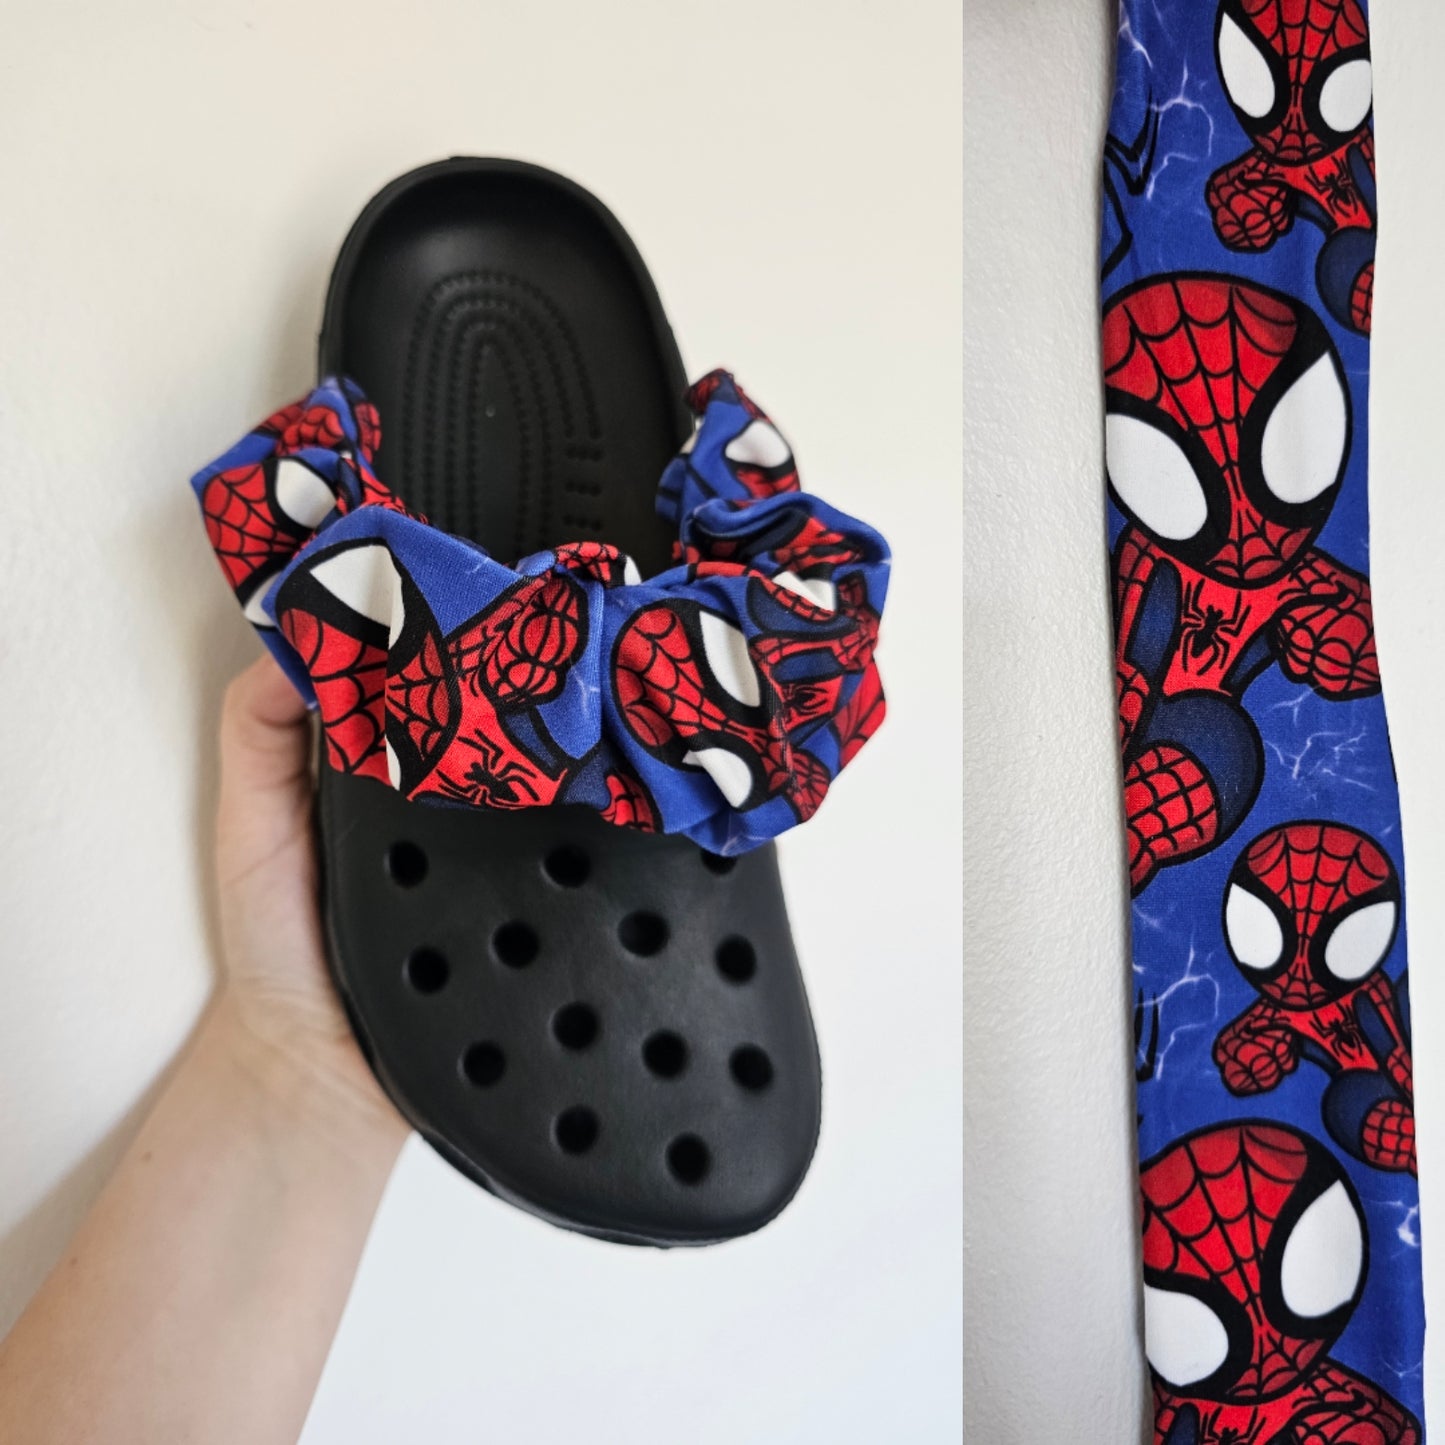 Super hero shoe strap covers